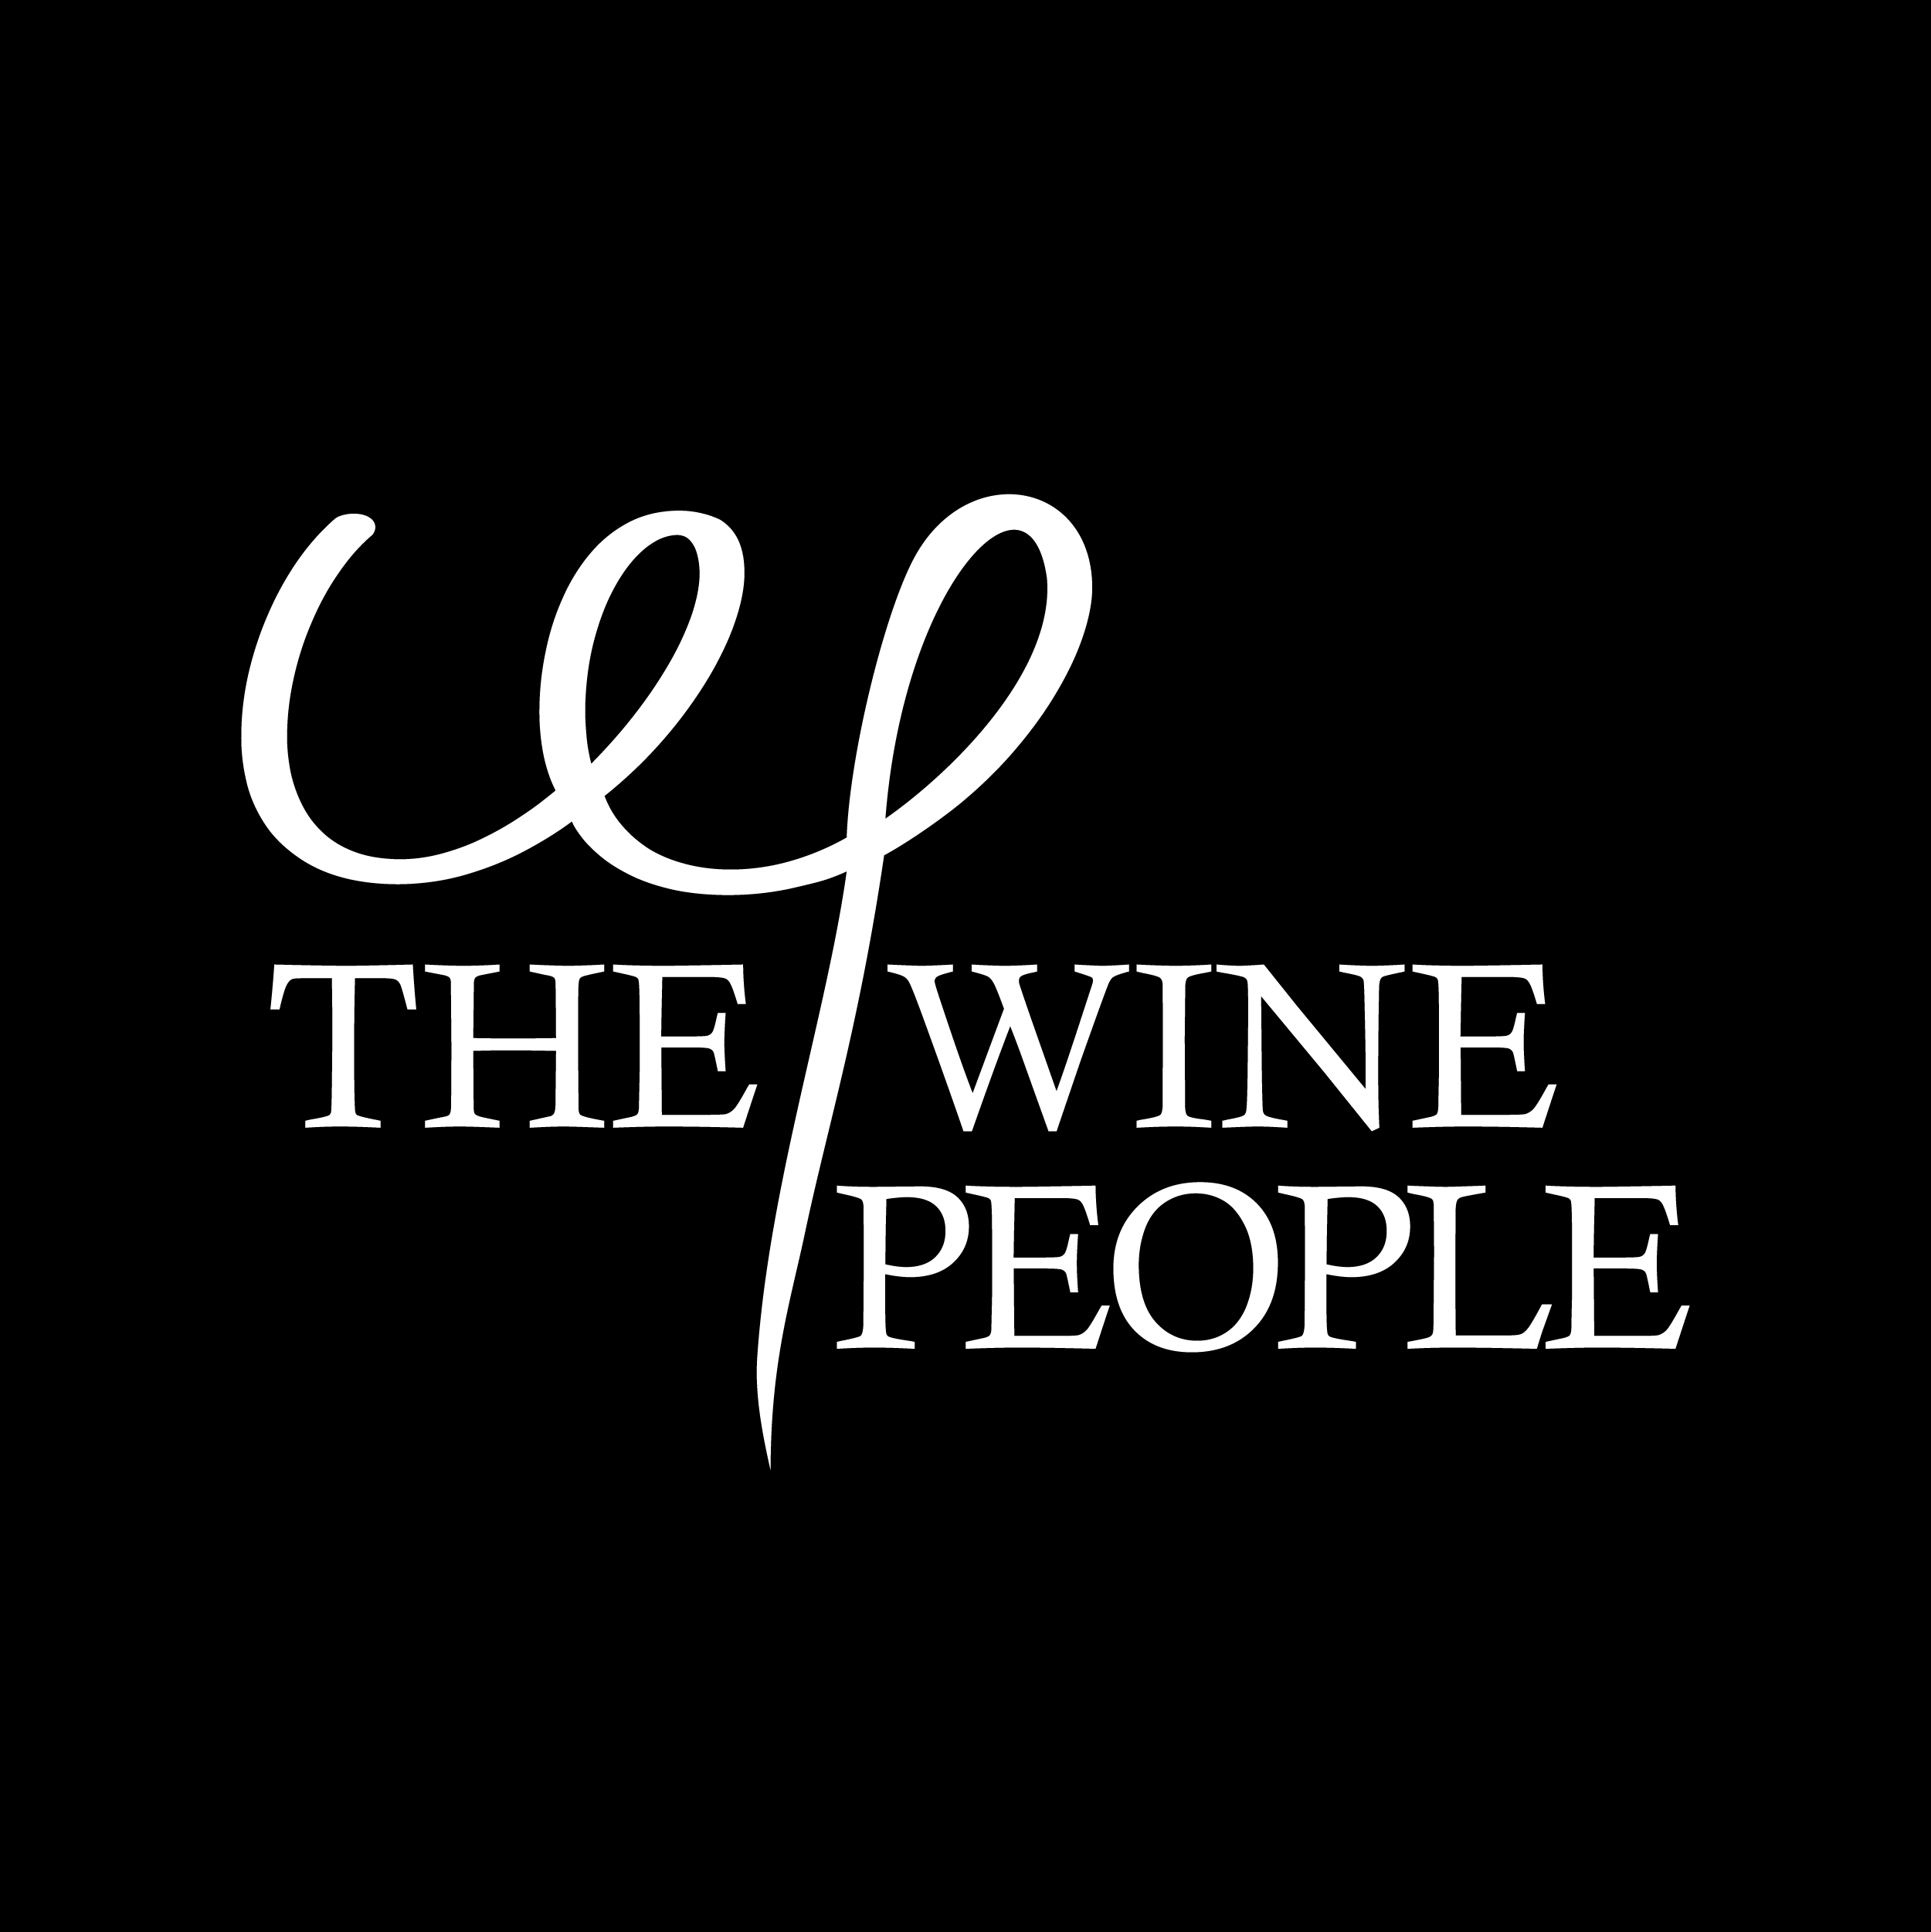 The wine people